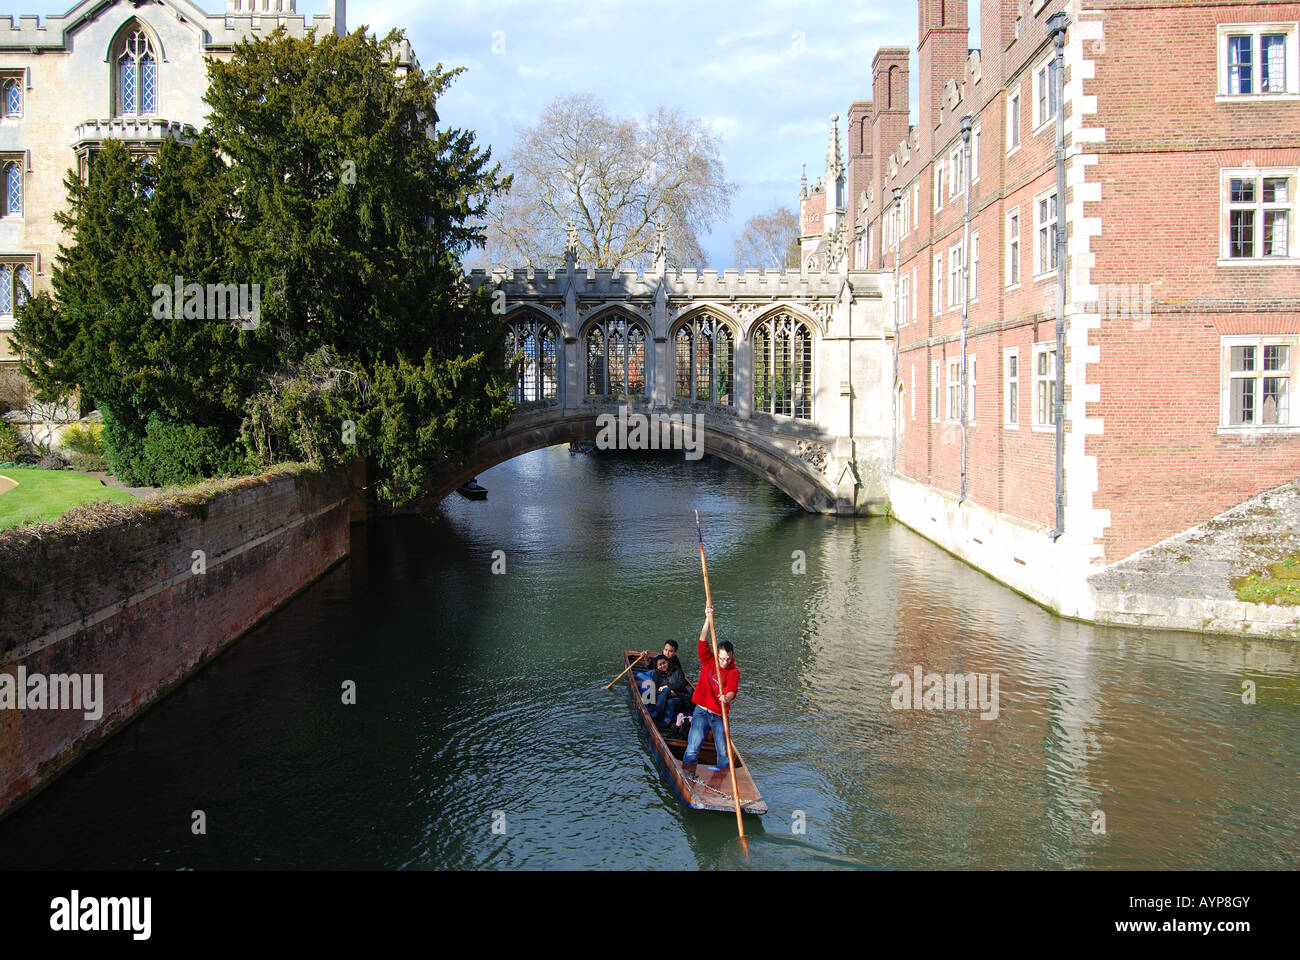 Stechkahn fahren am Fluss Cam, Seufzerbrücke, St John's College in Cambridge, Cambridgeshire, England, Vereinigtes Königreich Stockfoto